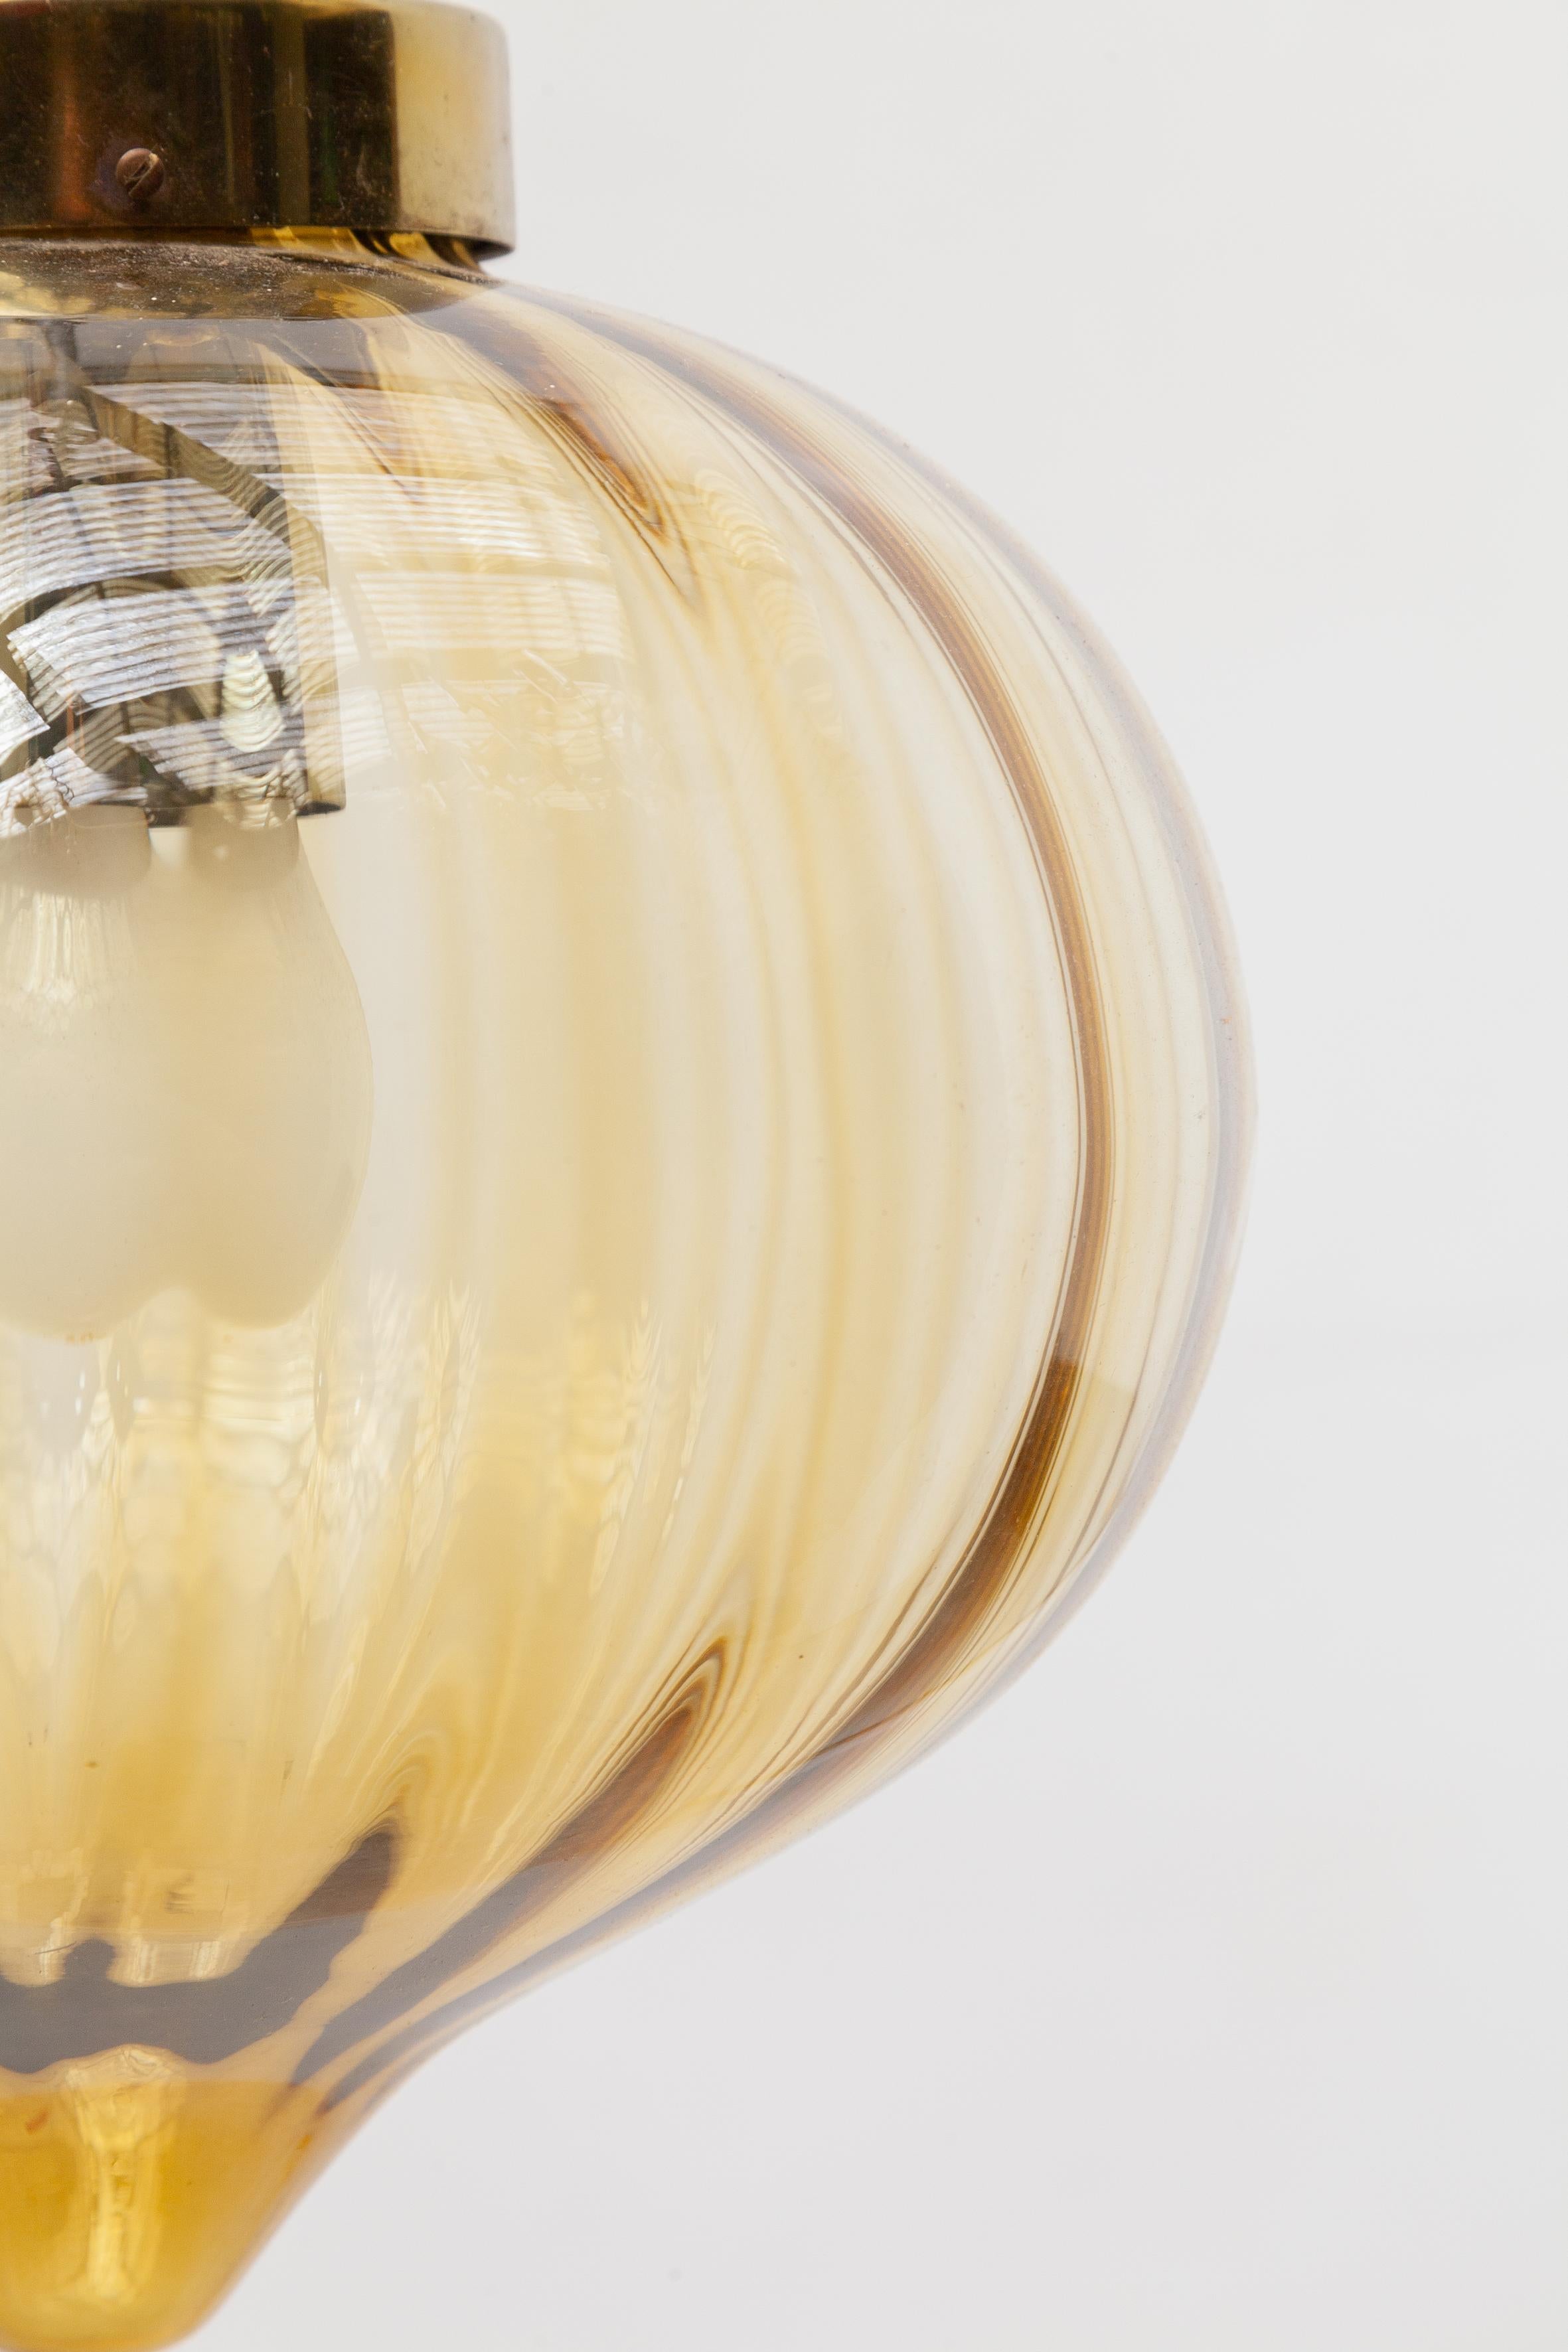 Mid-Century Modern Amber Raak Glass Pendant Light Hand Blown, 1970s For Sale